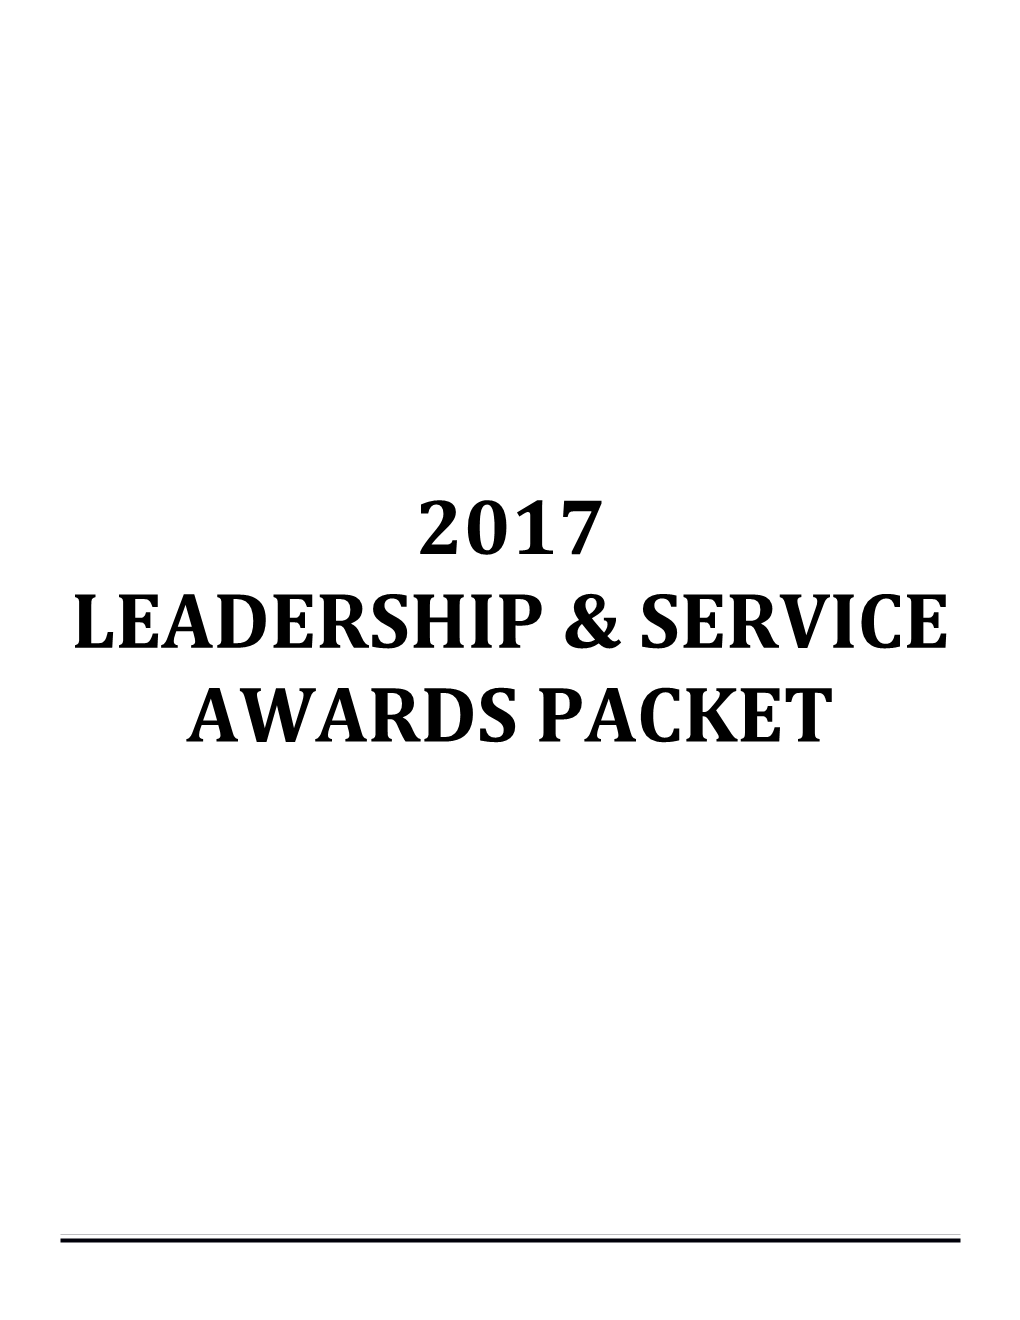 Leadership & Service Awards Packet